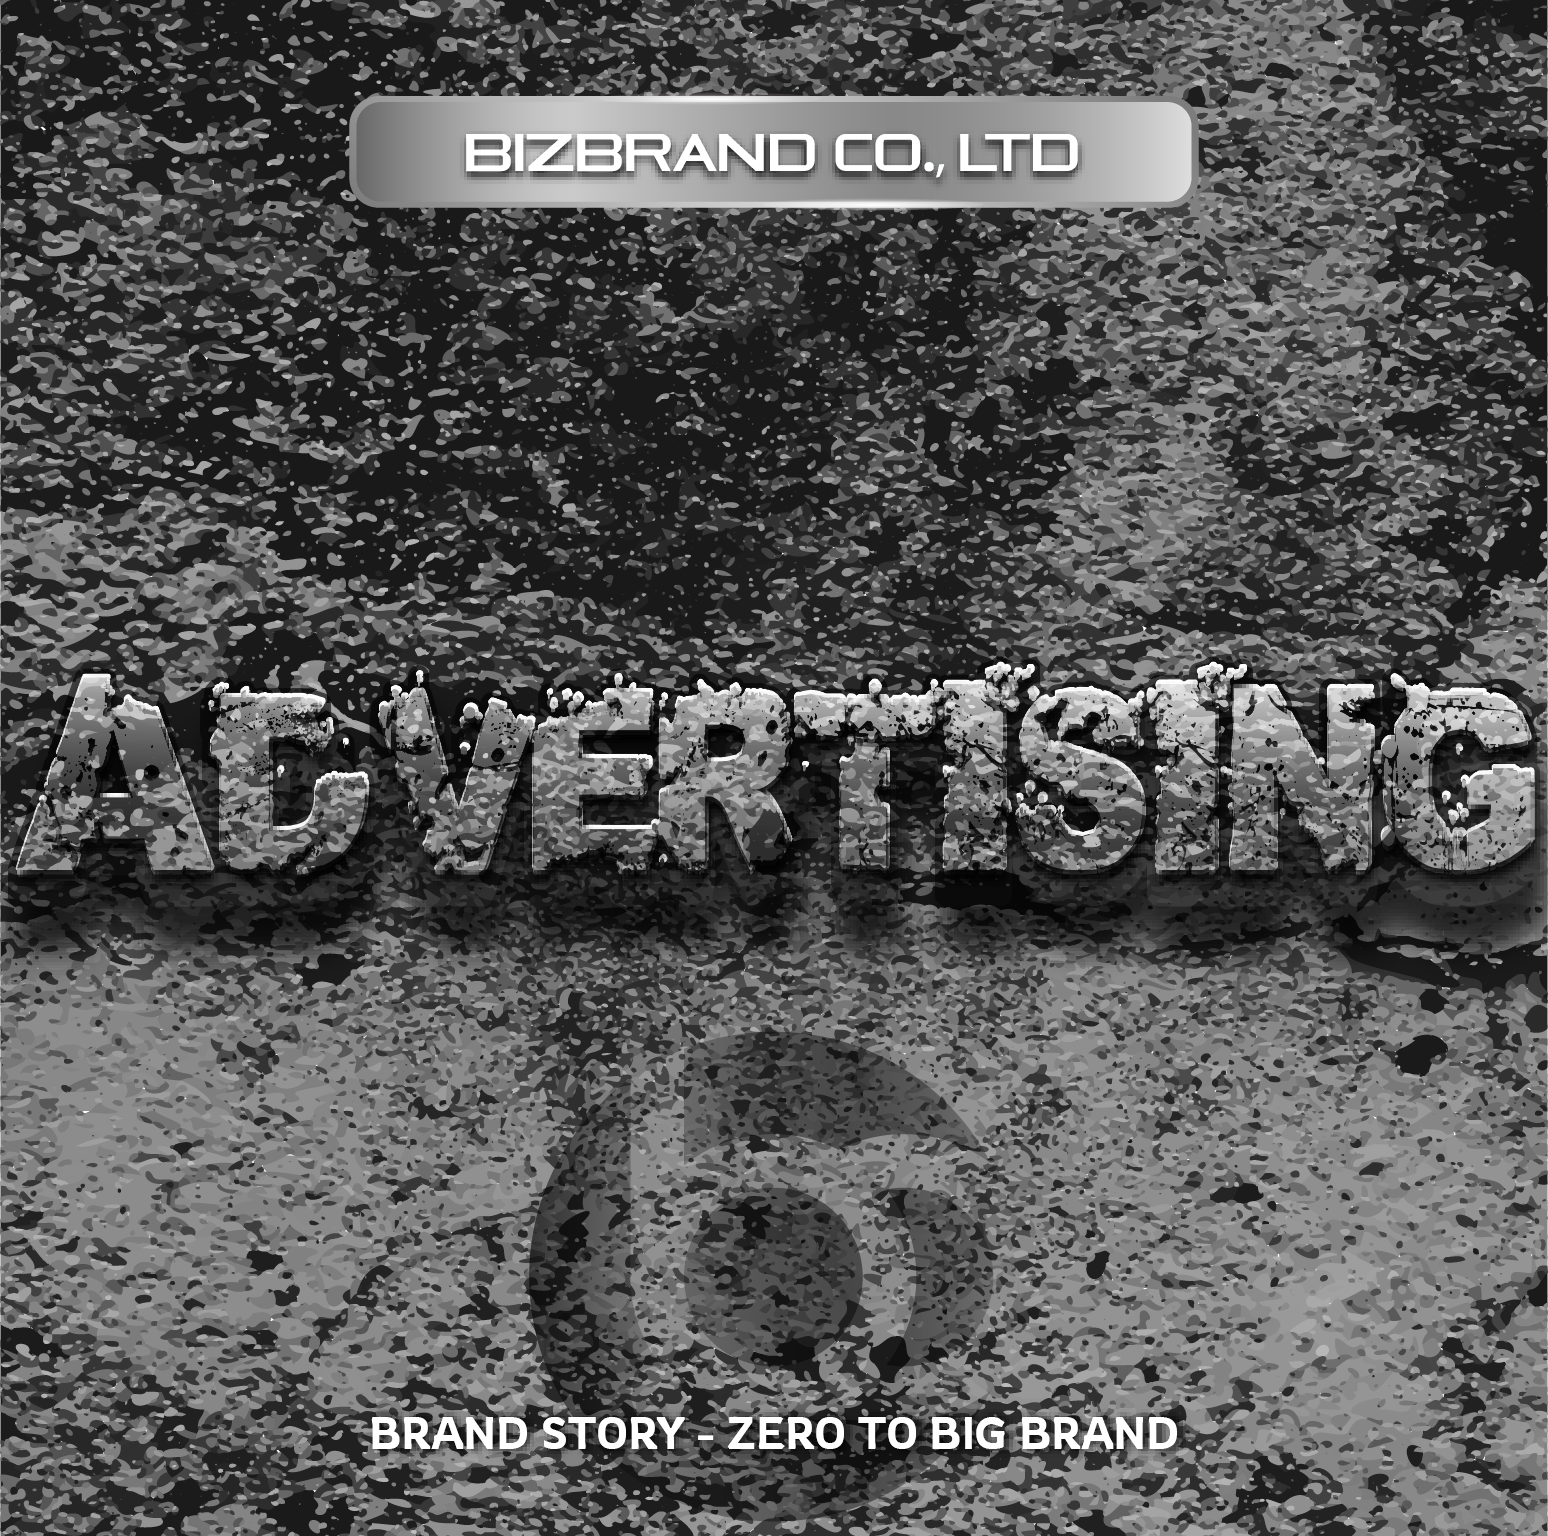 Advertising bizbrand 1